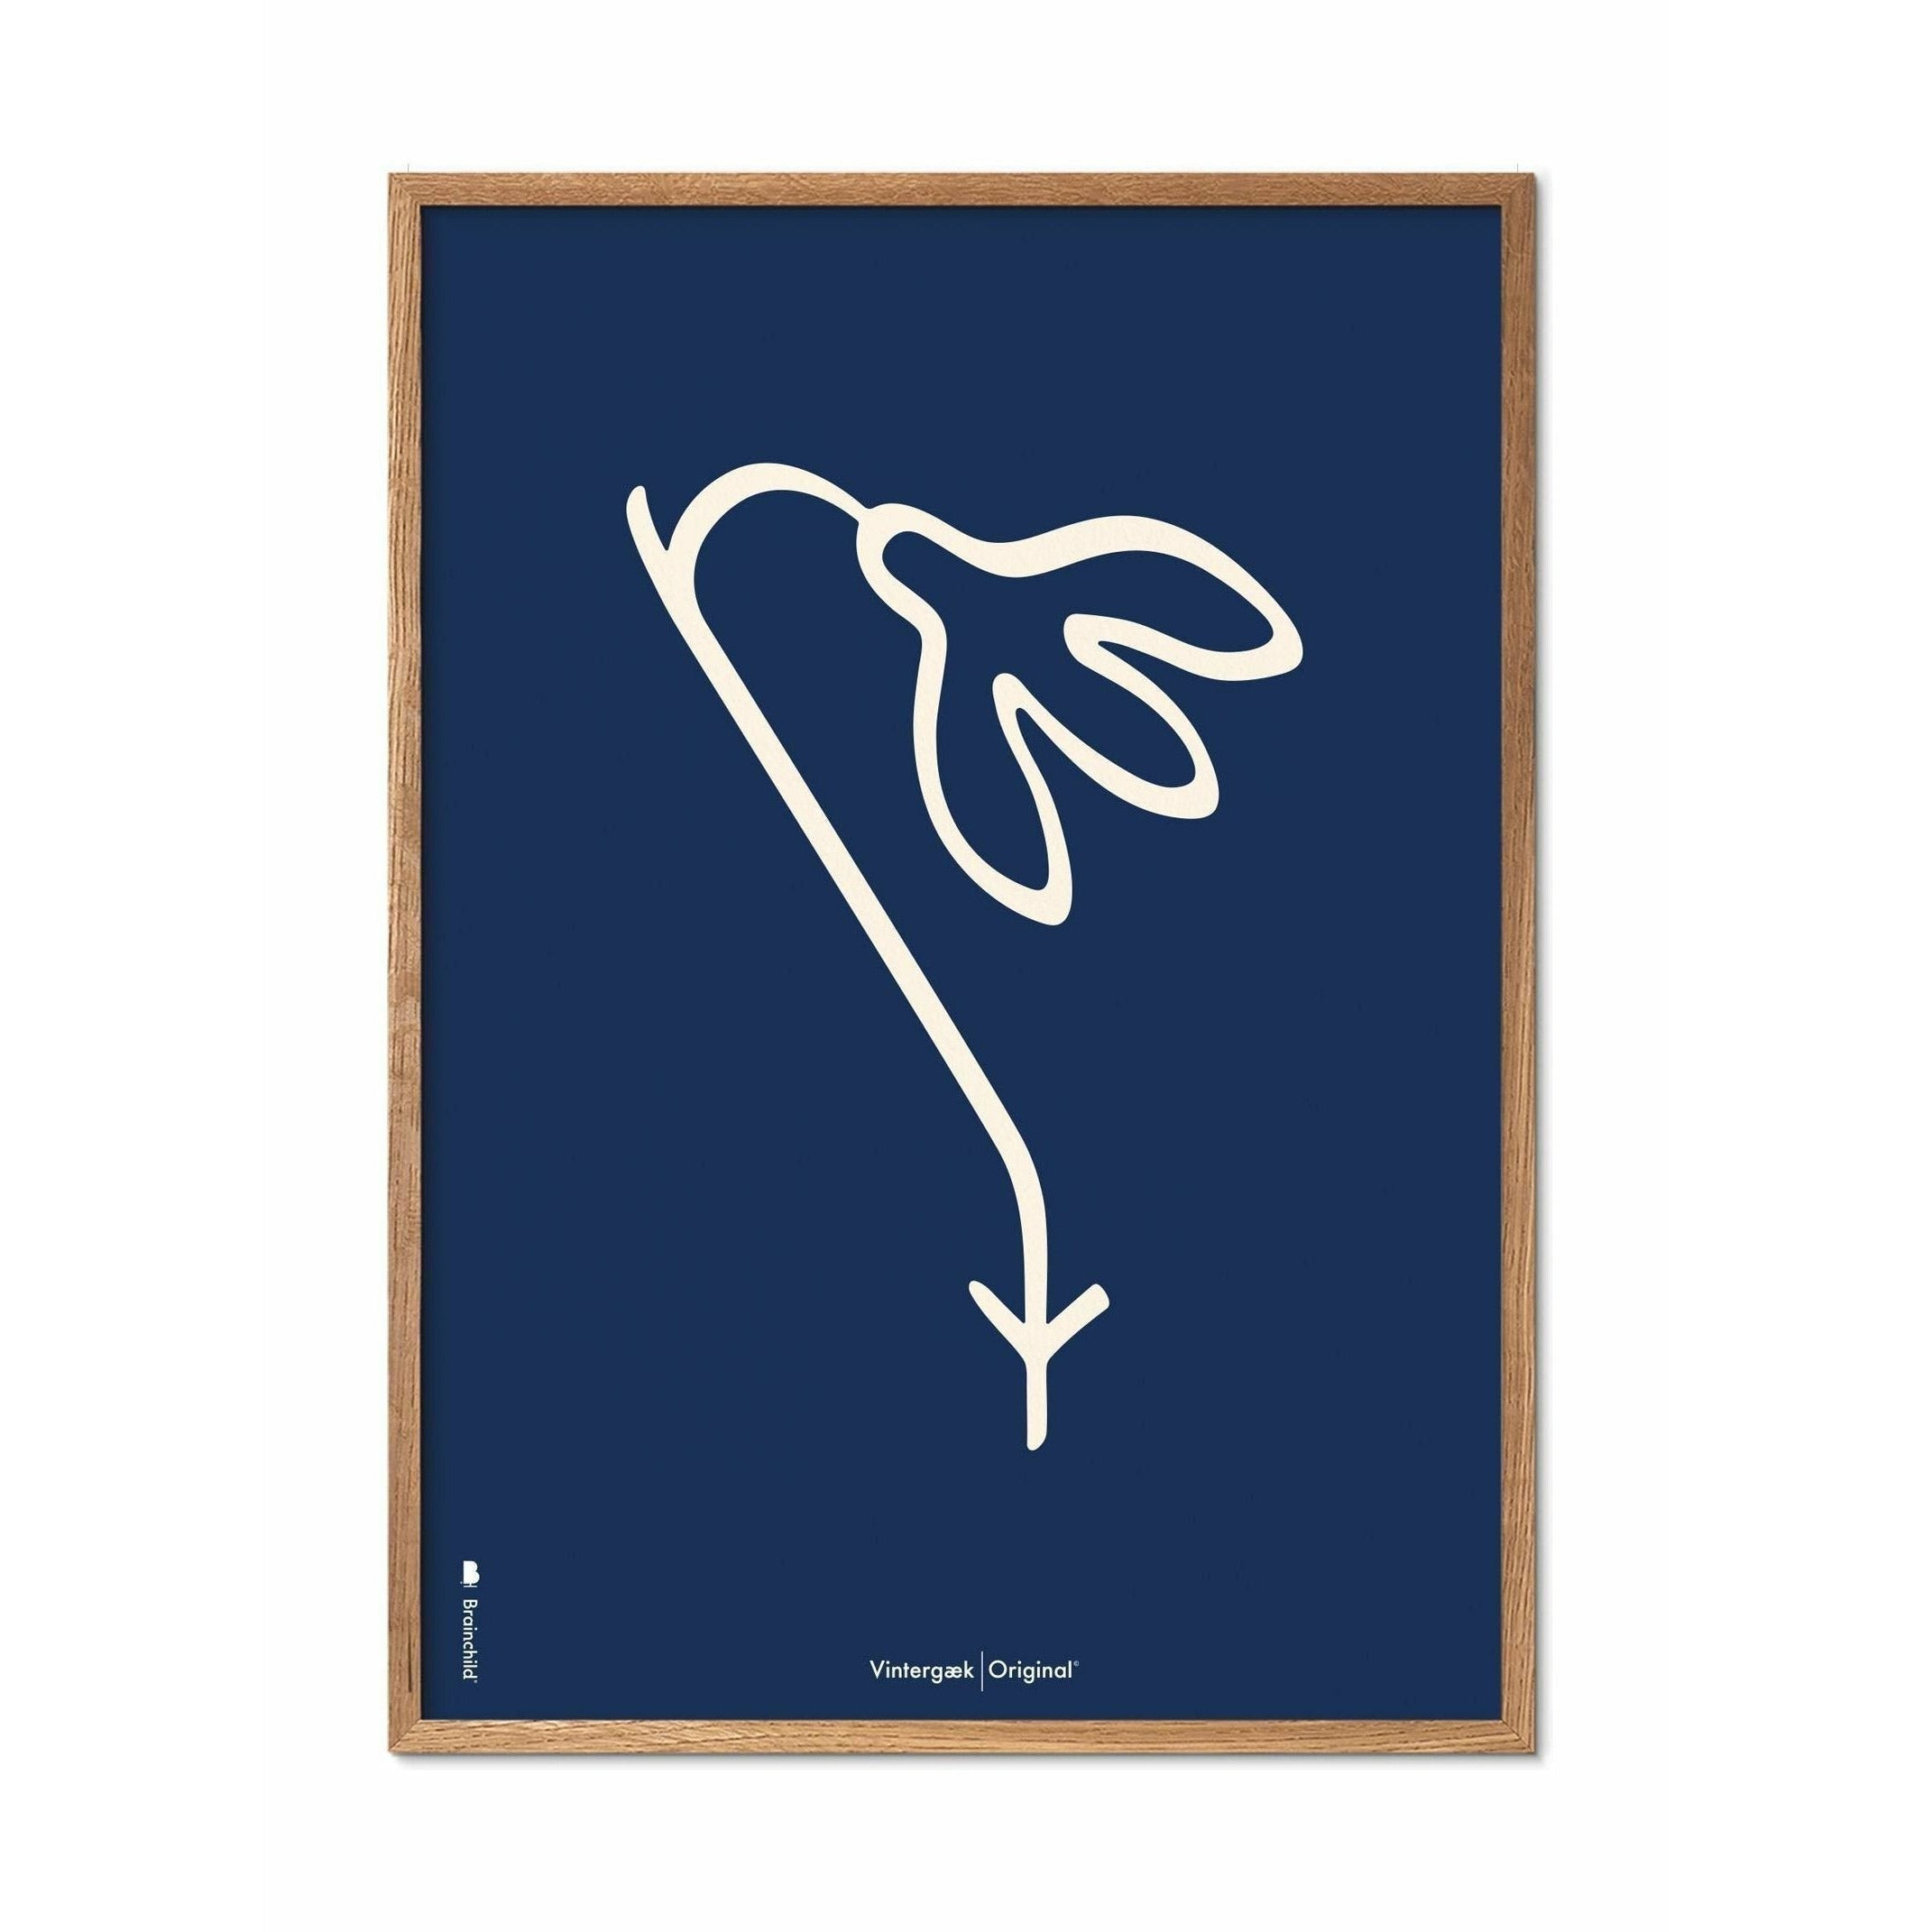 Brainchild Vintergapslinjeposter, ram i lätt trä 70x100 cm, blå bakgrund